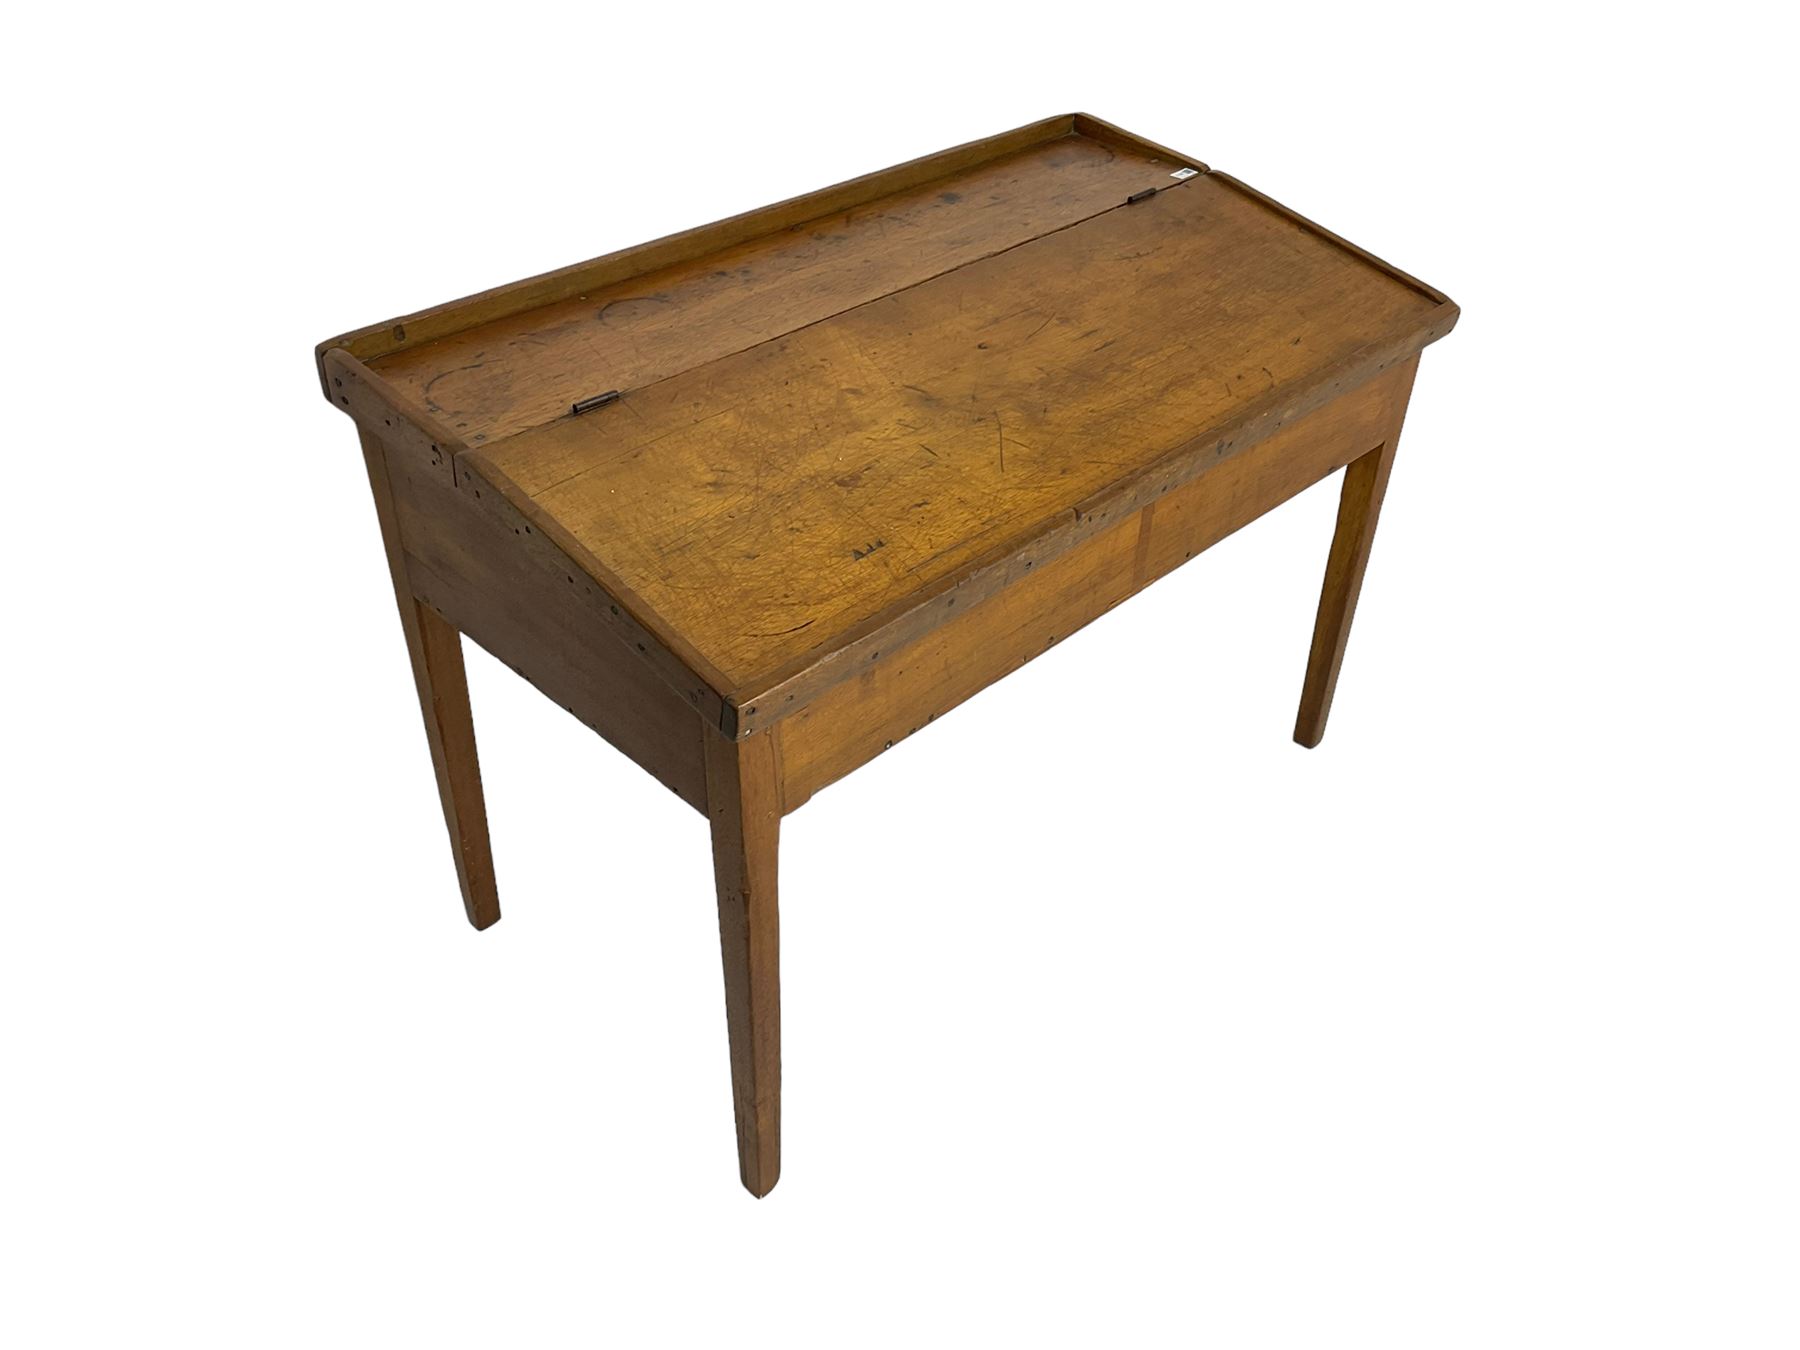 Late 19th century walnut school desk - Image 6 of 6